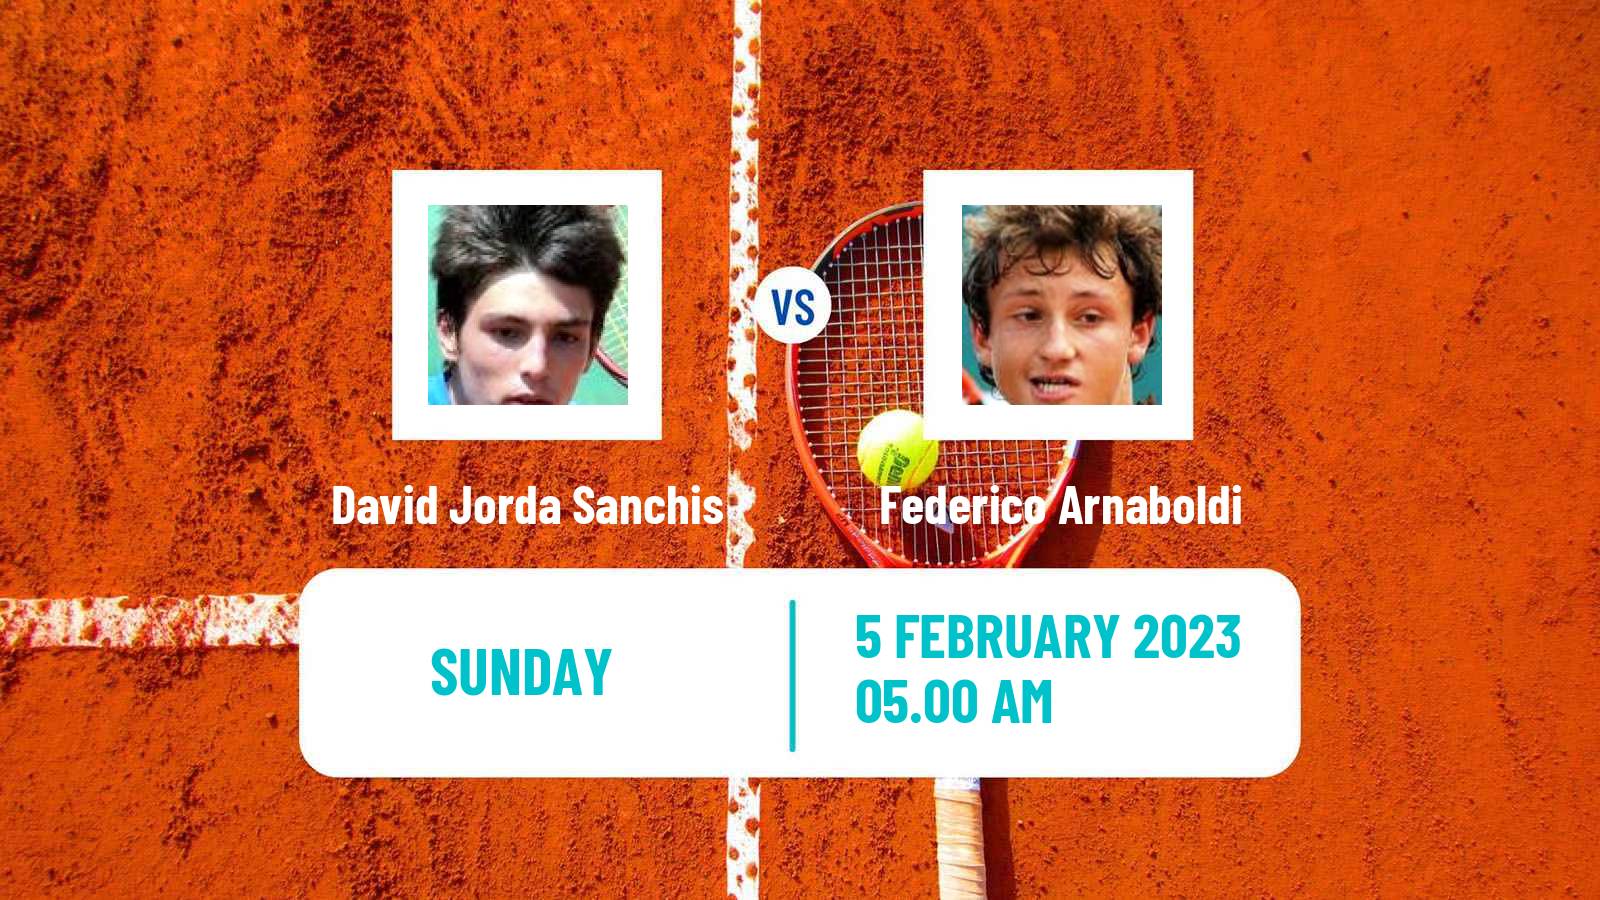 Tennis ATP Challenger David Jorda Sanchis - Federico Arnaboldi